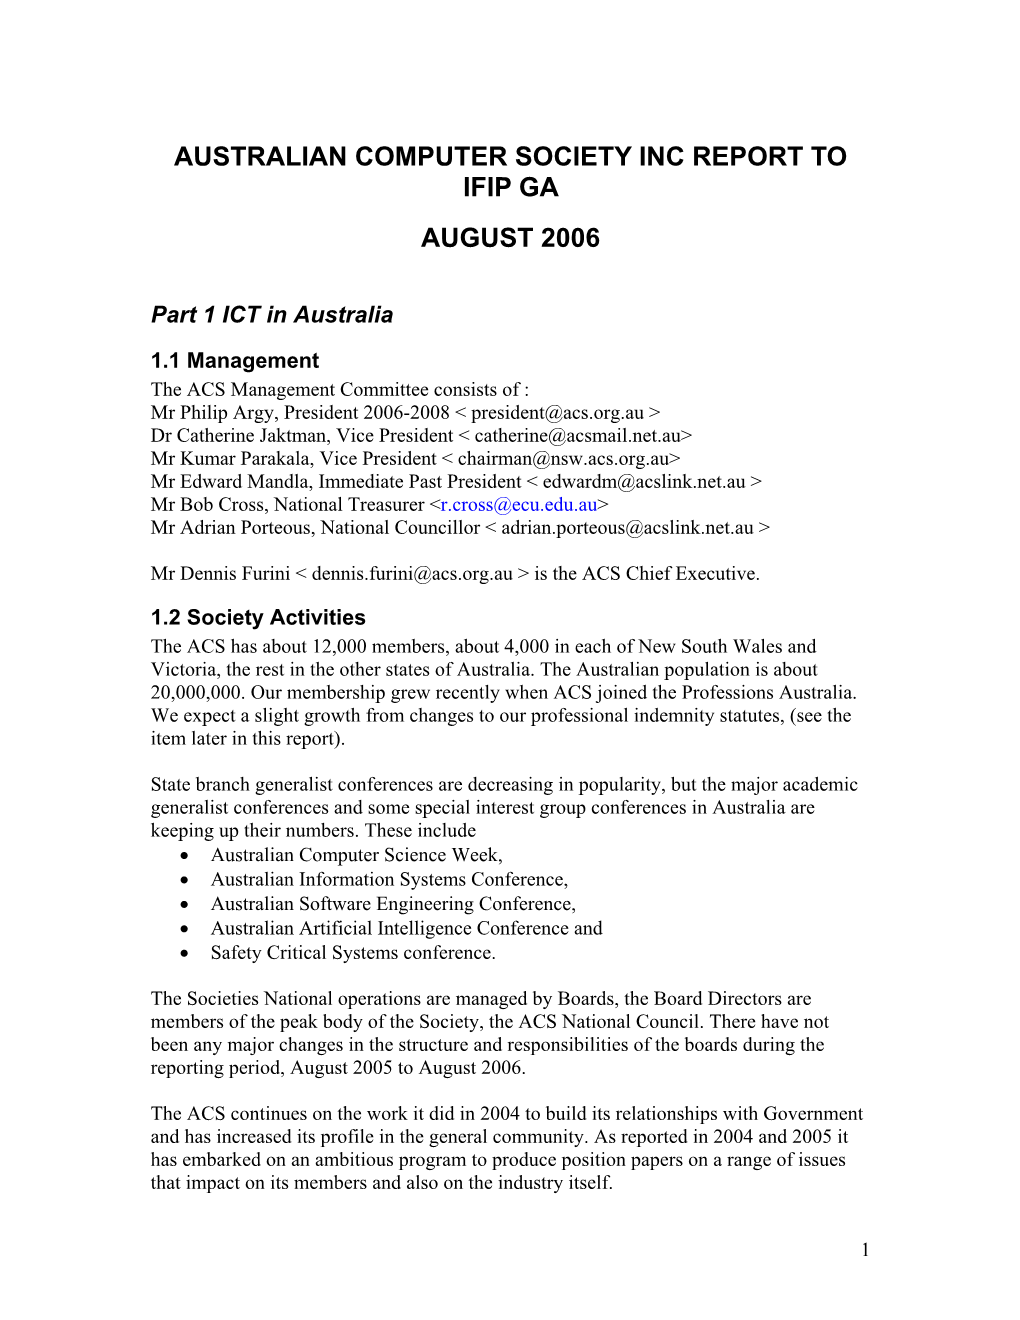 Australian Computer Society Inc Report to Ifip Ga August 2006